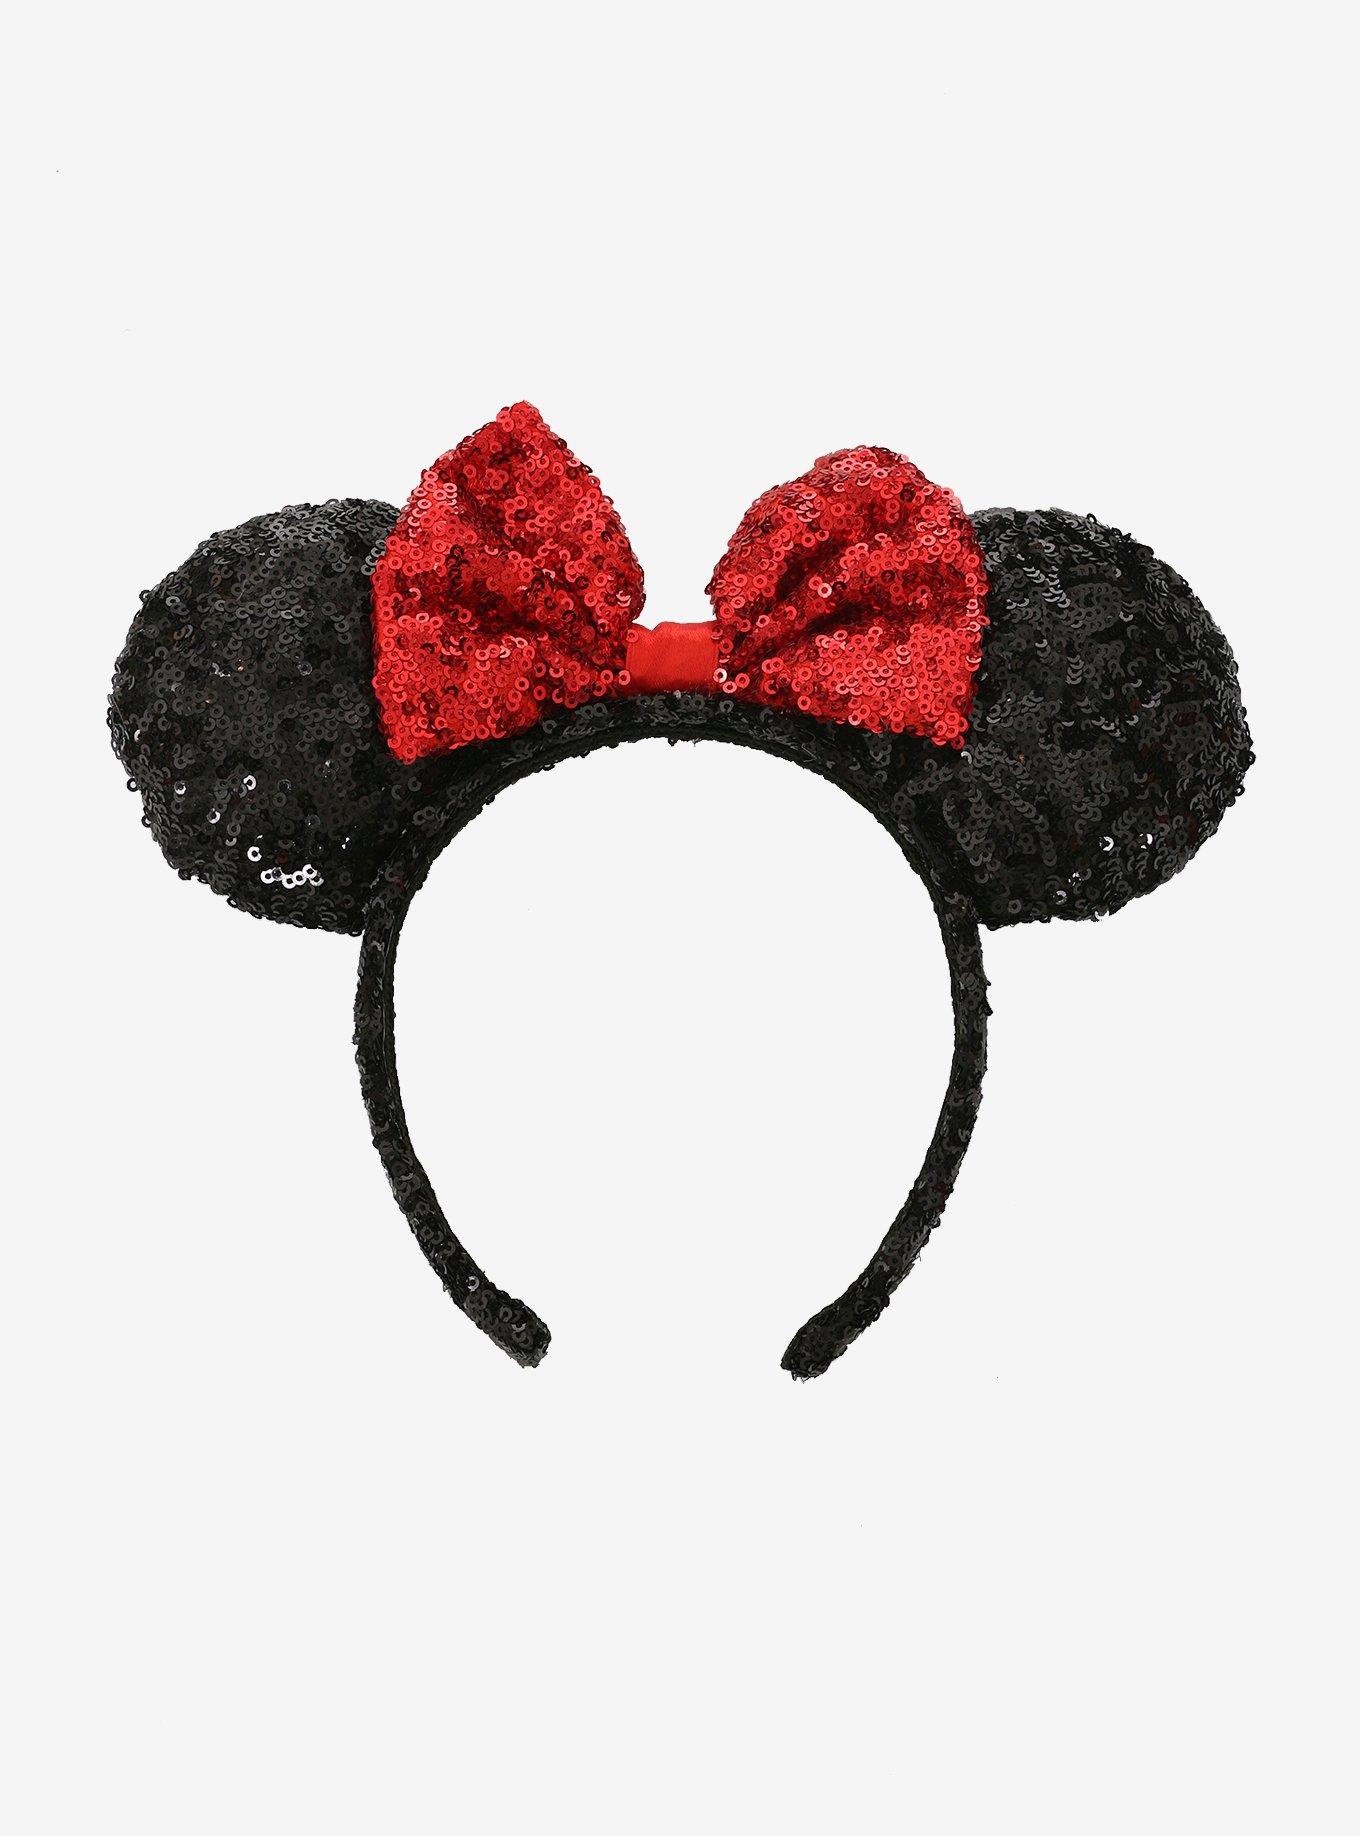 Disney Minnie Mouse Red Sequin Ear Headband, , alternate